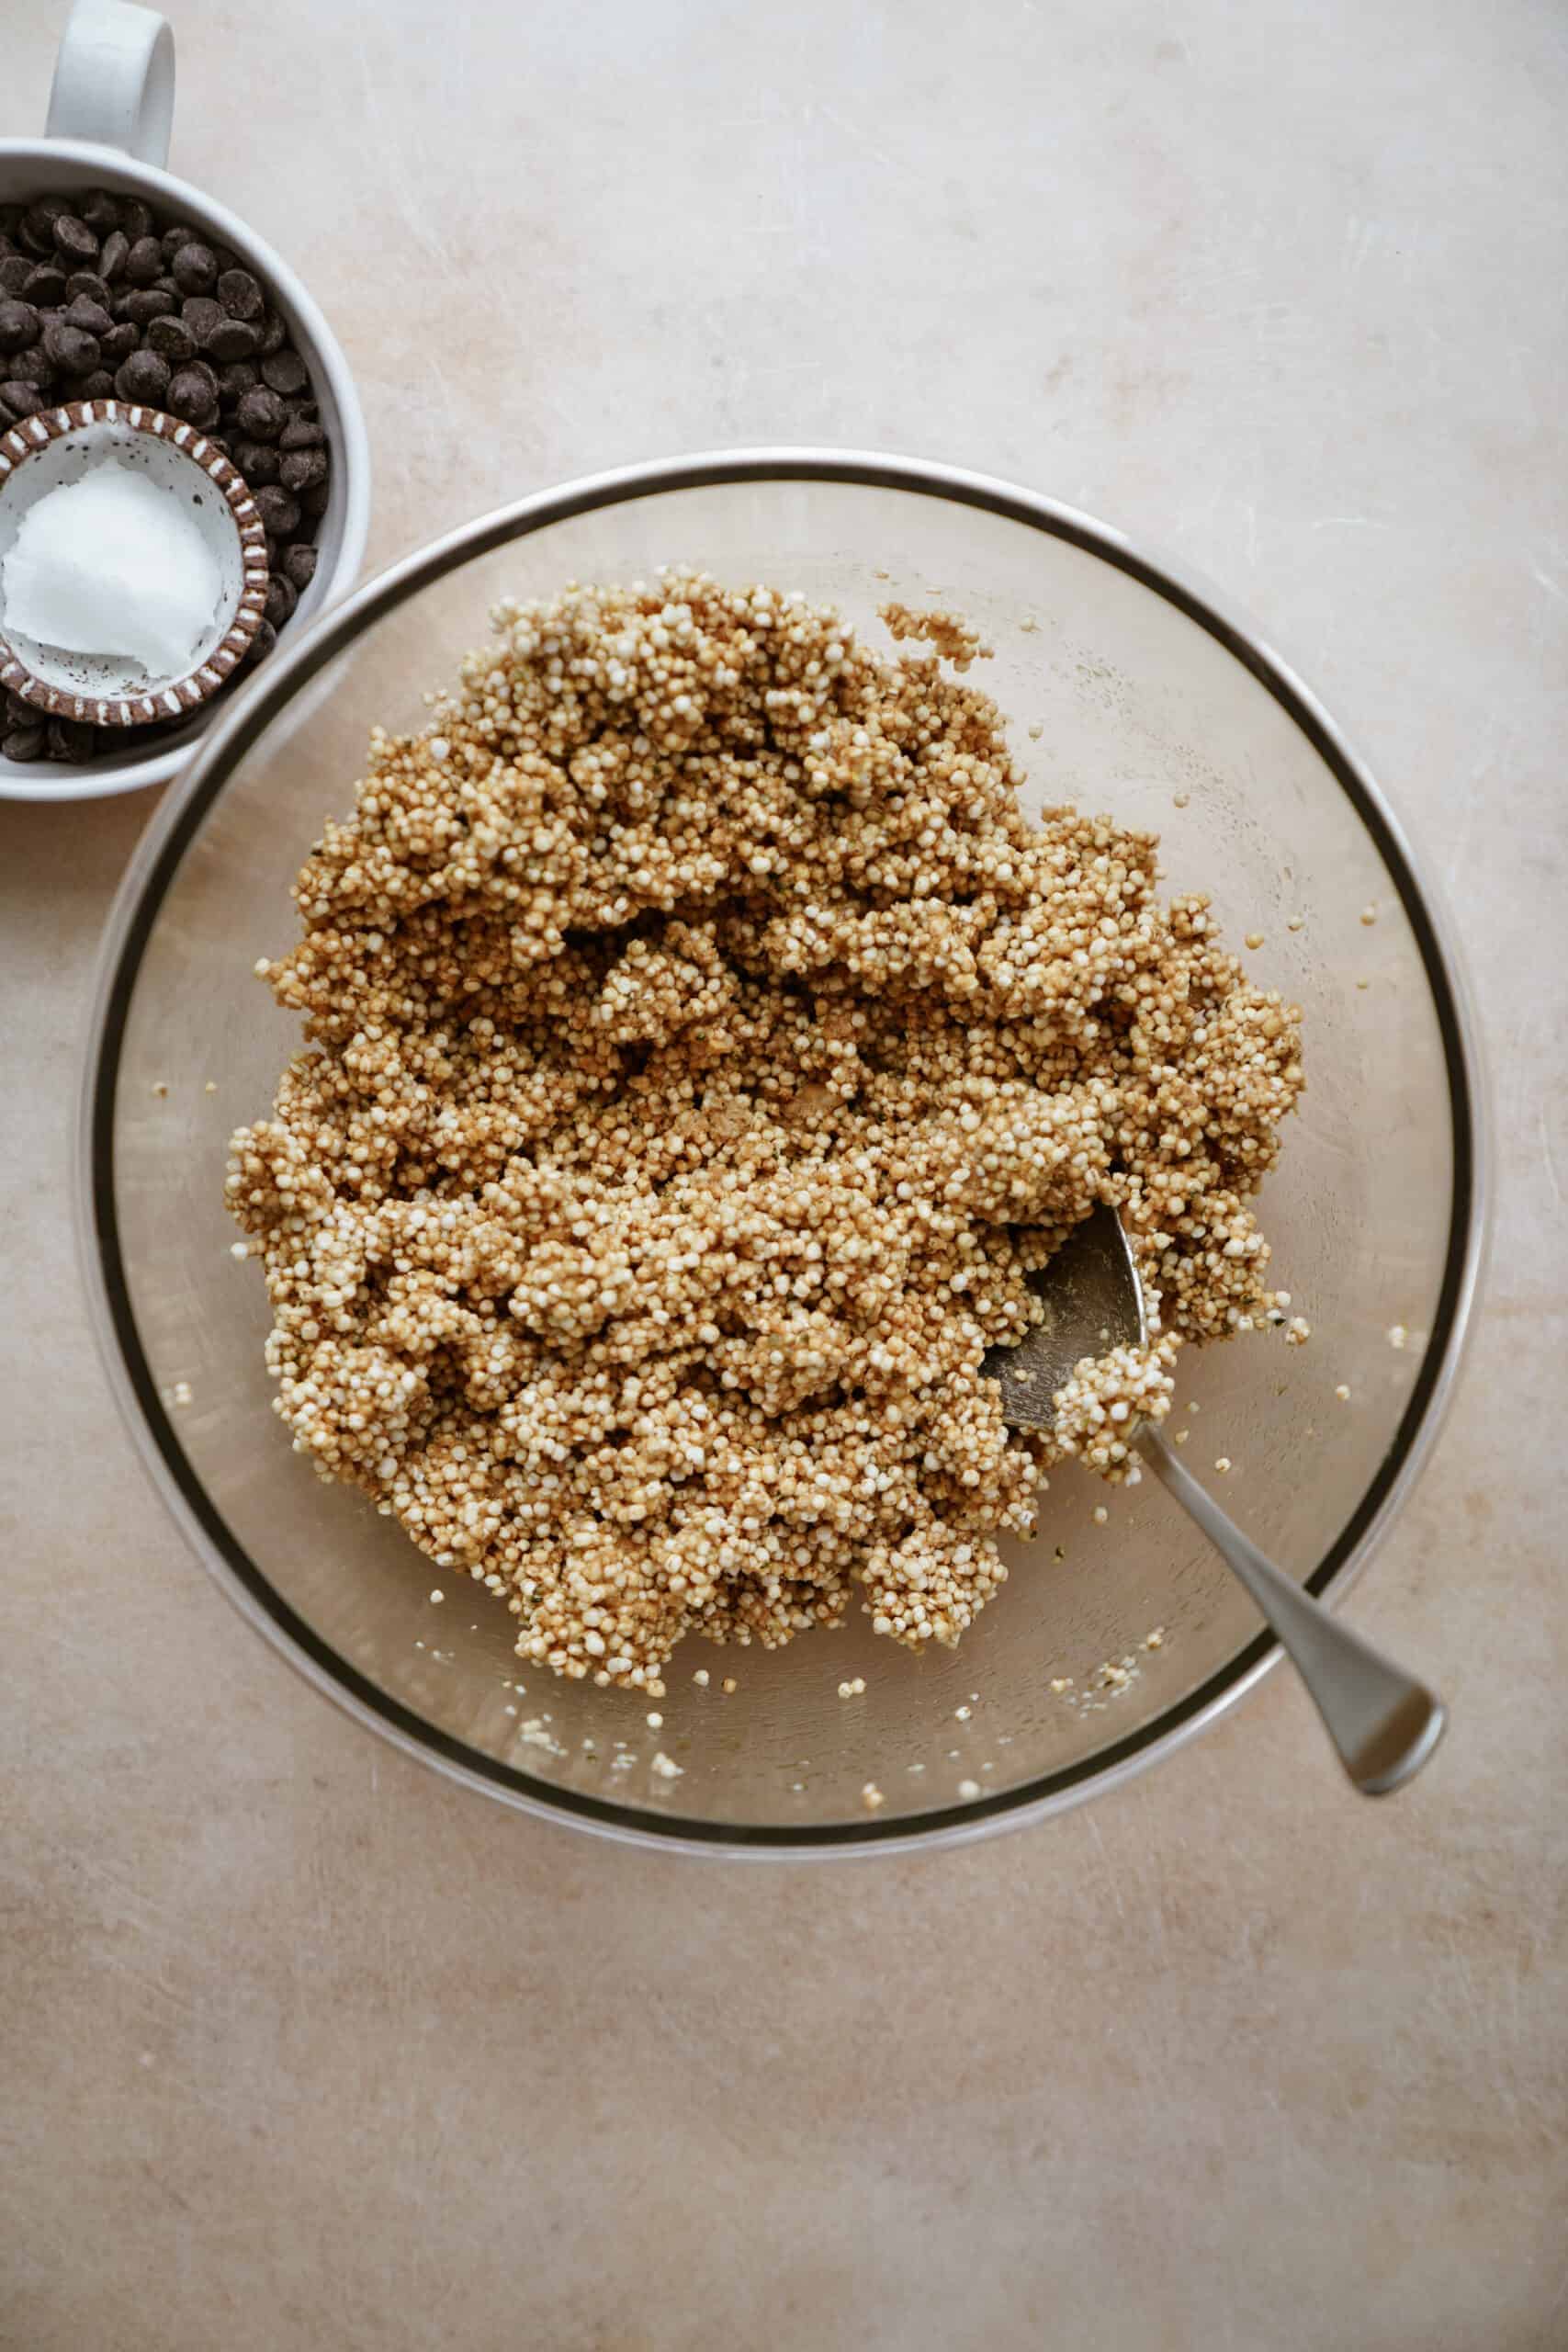  puffed quinoa bars ingredient in bowl